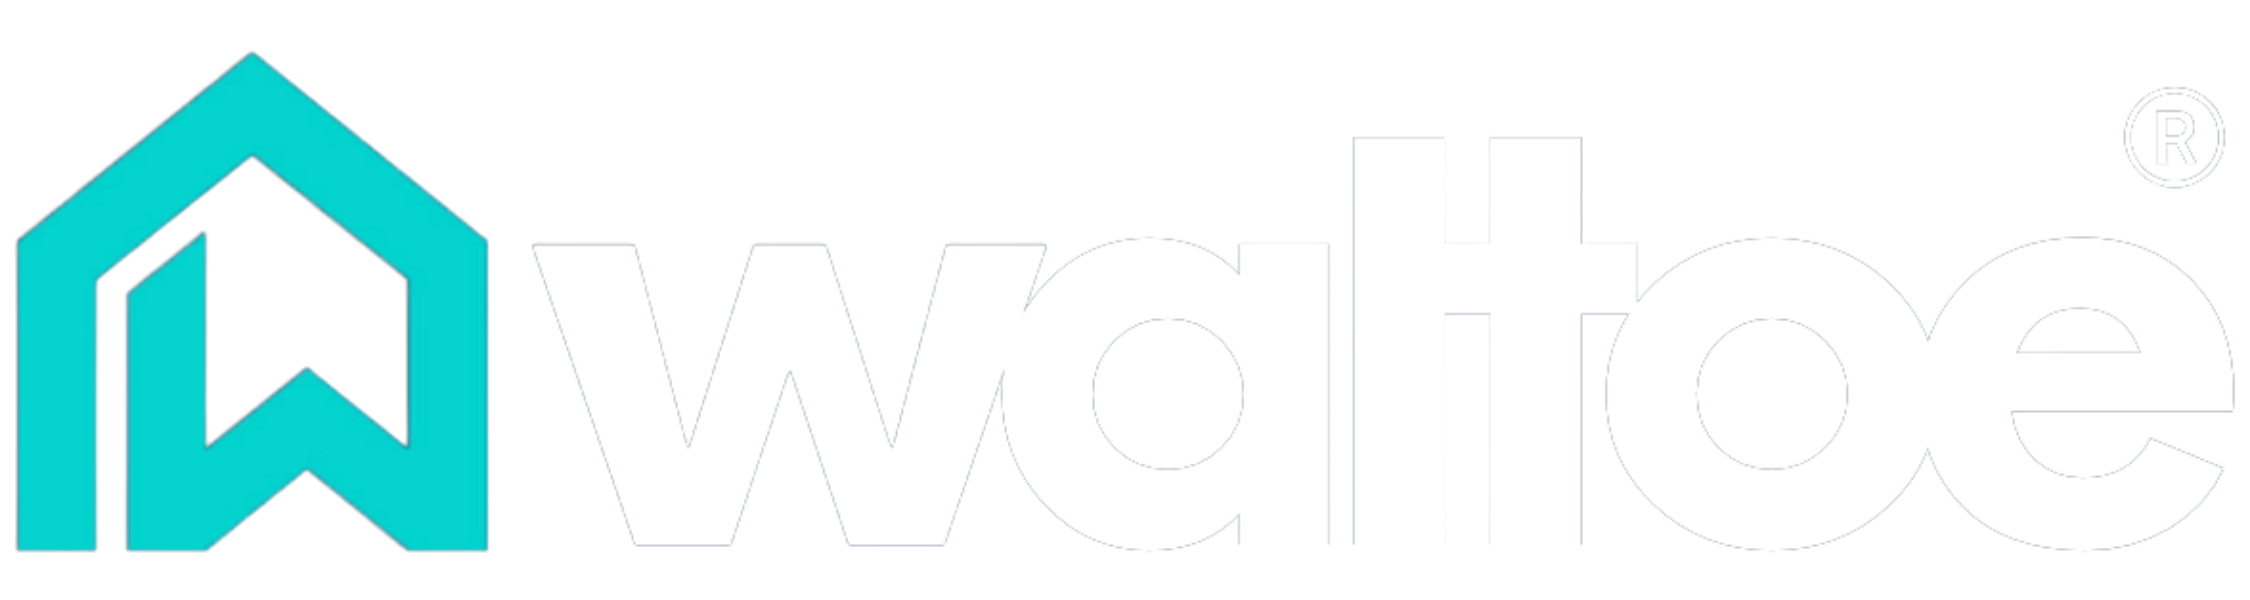 Waltoe.com | A.I Social Media Marketing